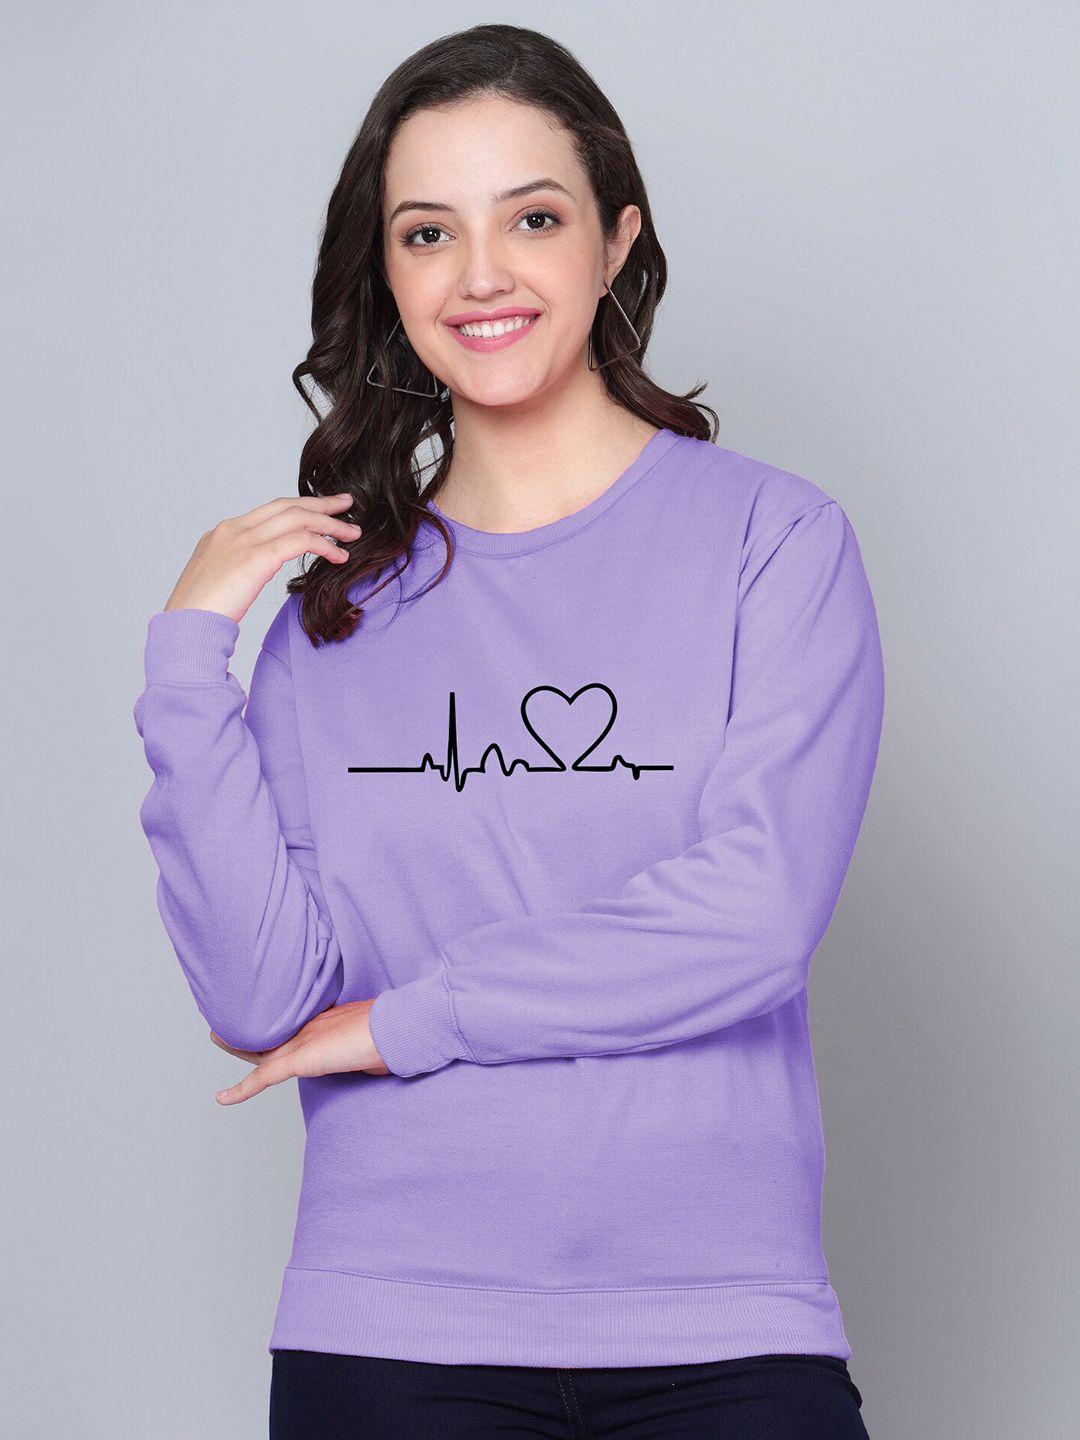 fashion and youth printed sweatshirt